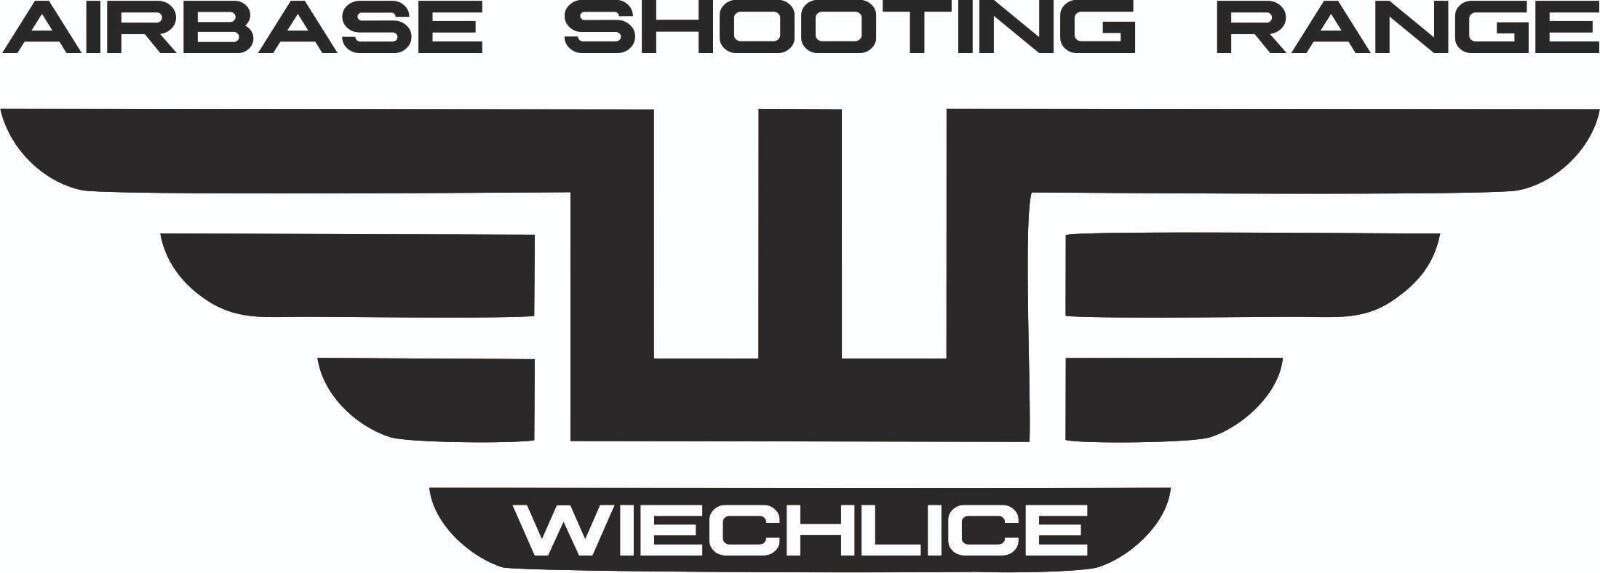 Wiechlice Airbase Shooting Range